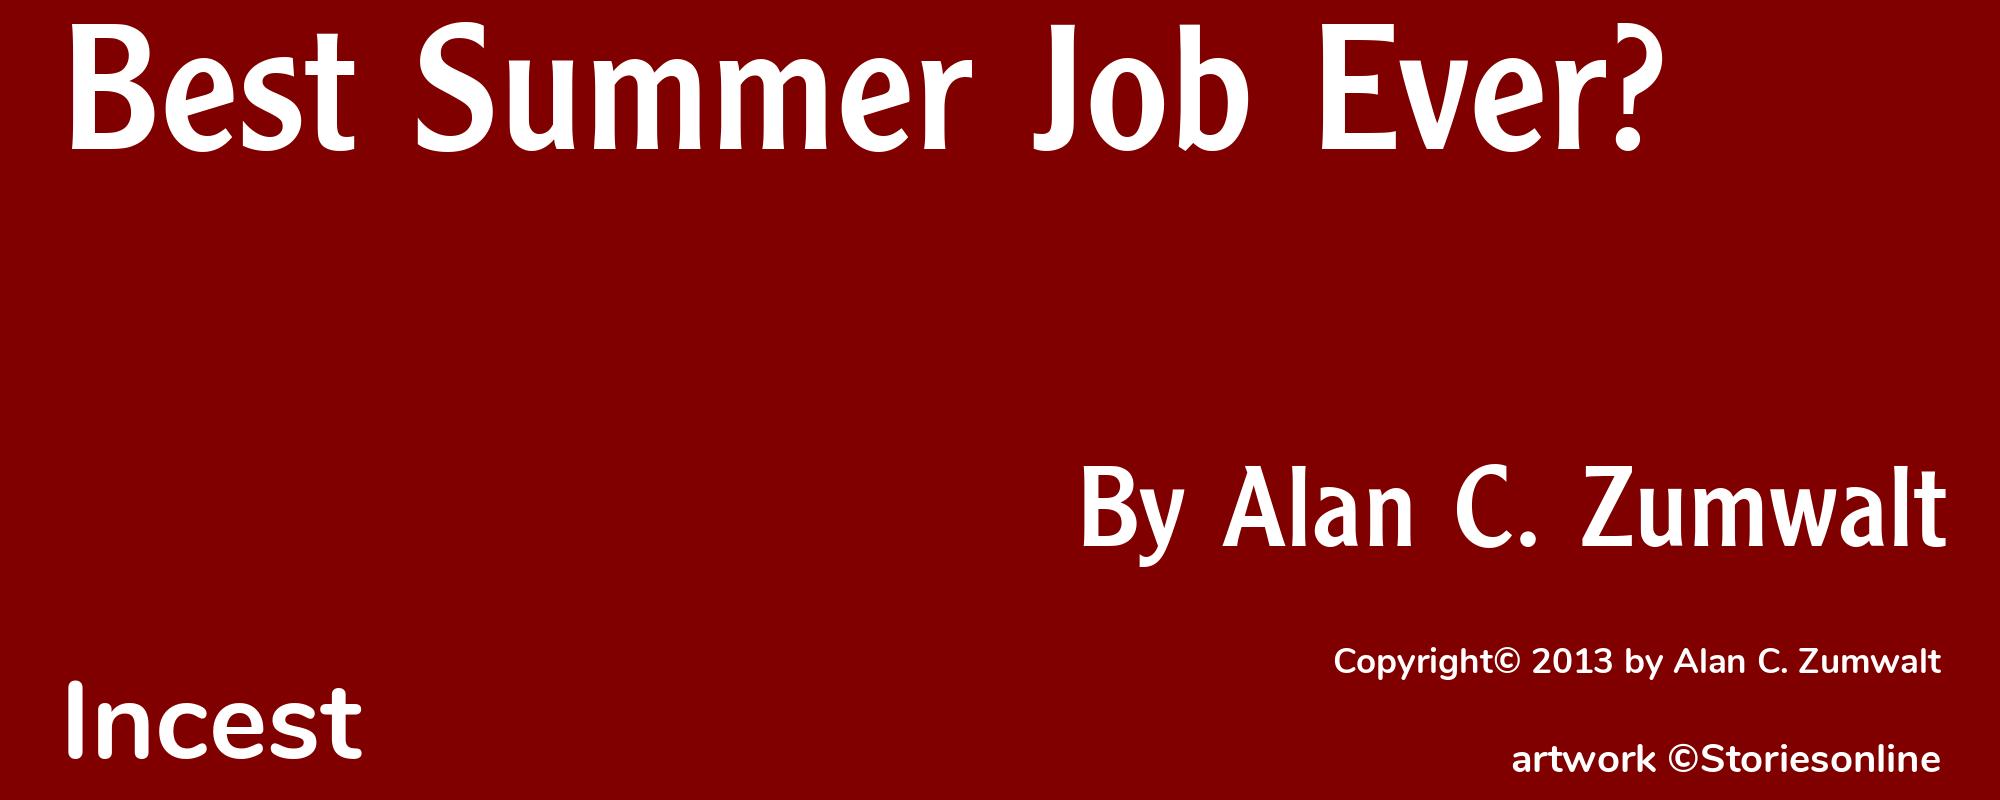 Best Summer Job Ever? - Cover